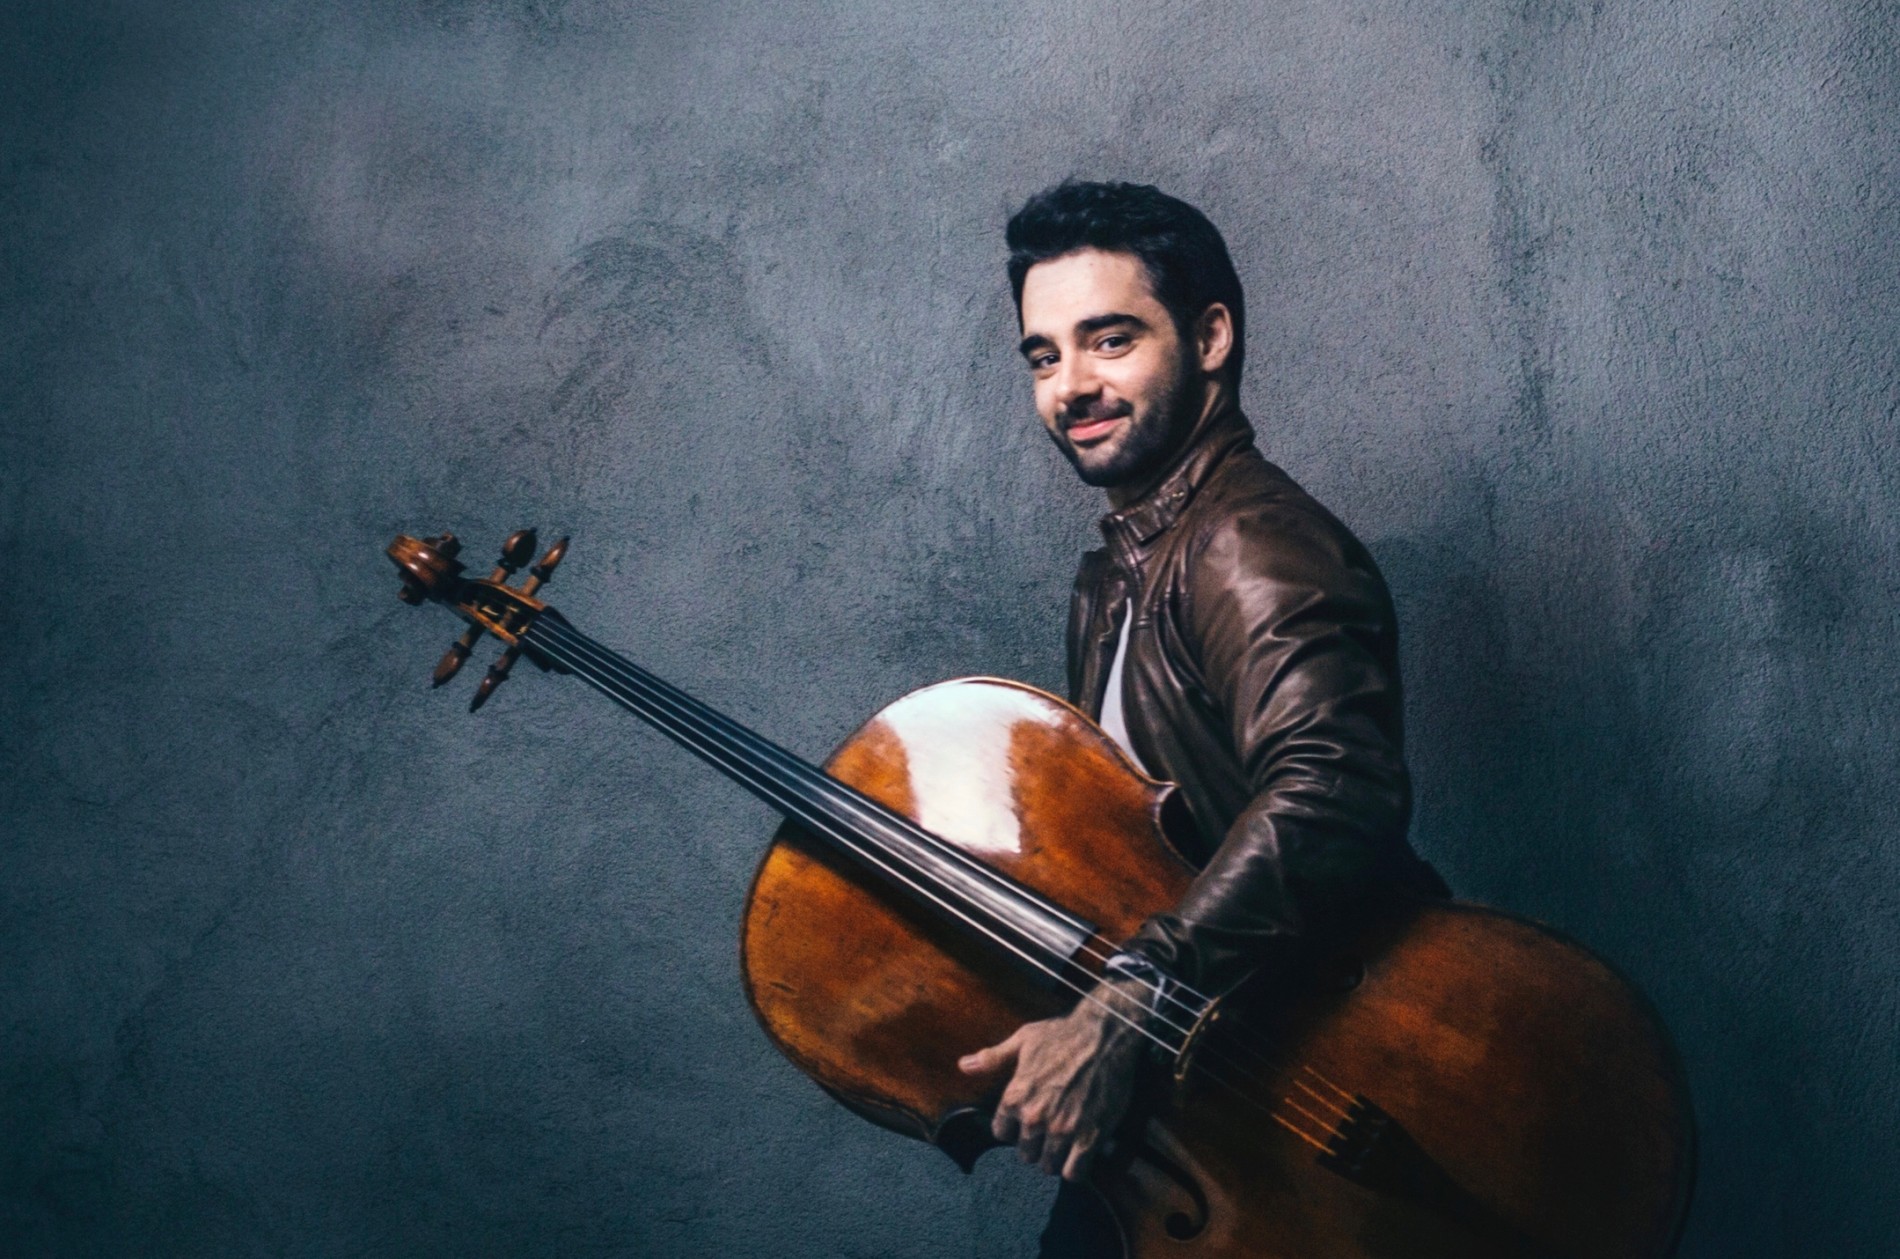 Pablo Ferrández, cellist, holding his instrument in left hand